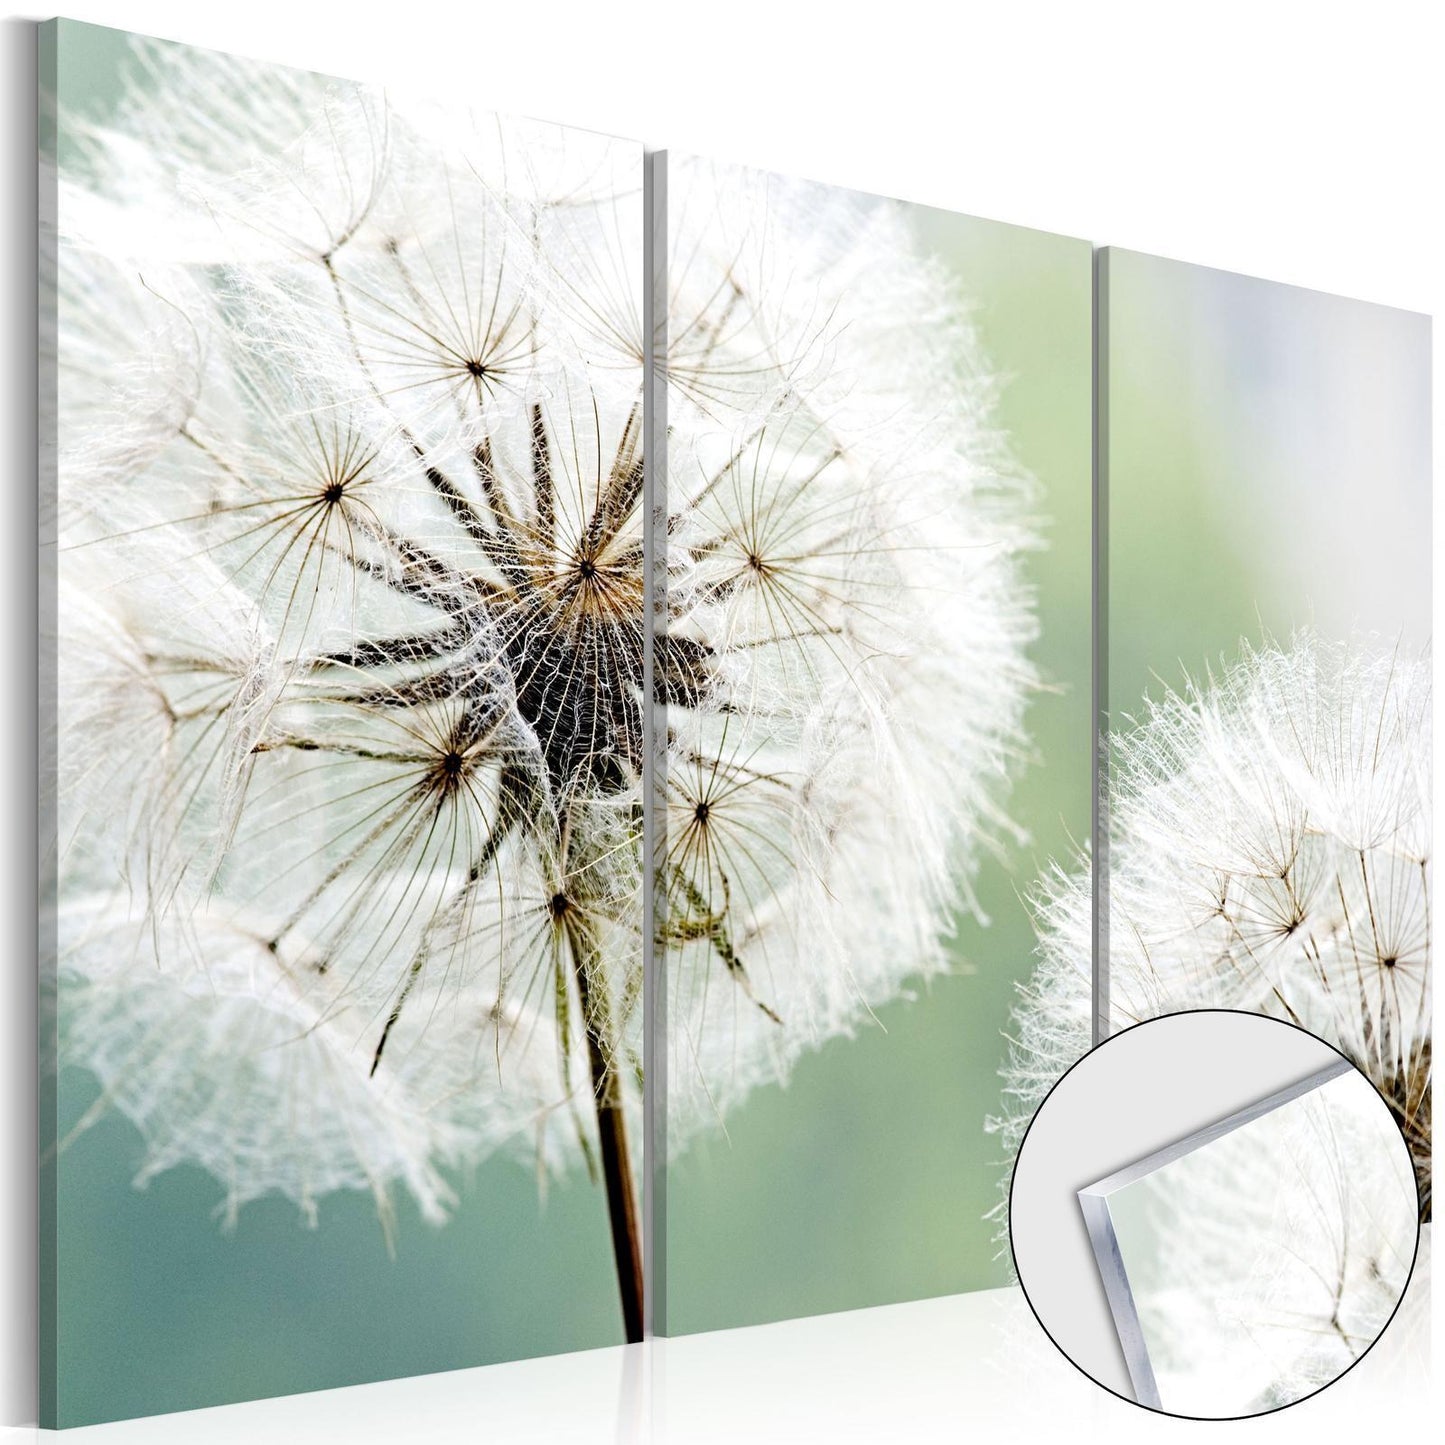 Image on acrylic glass - Fluffy Dandelions